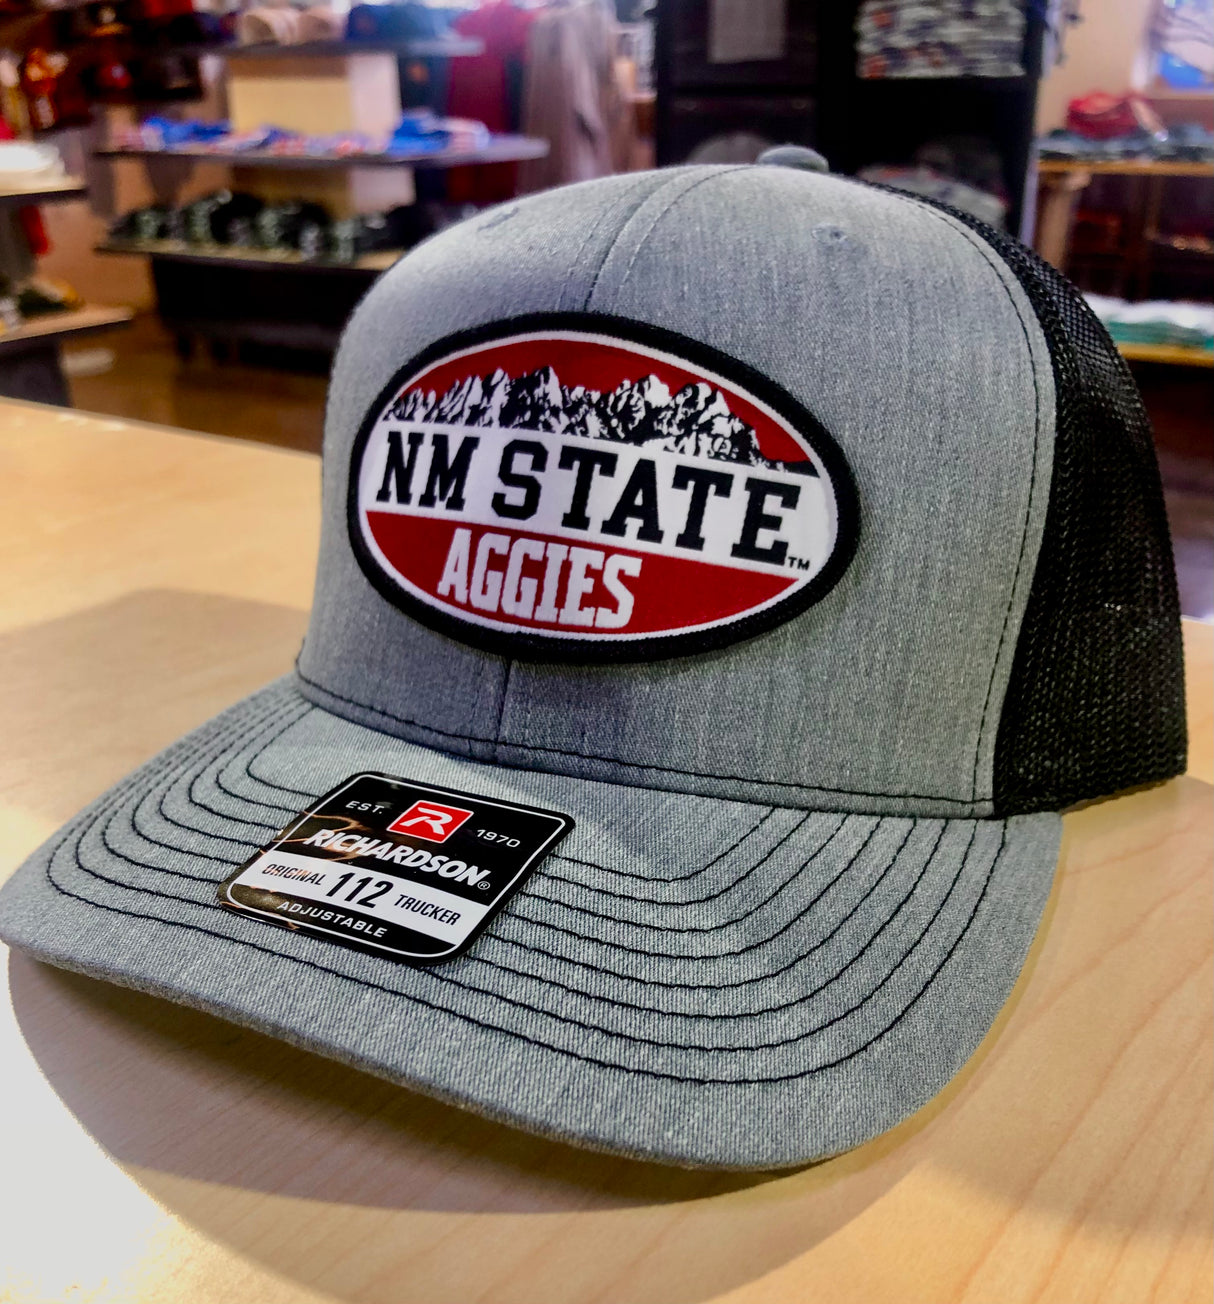 NM STATE AGGIES CAP